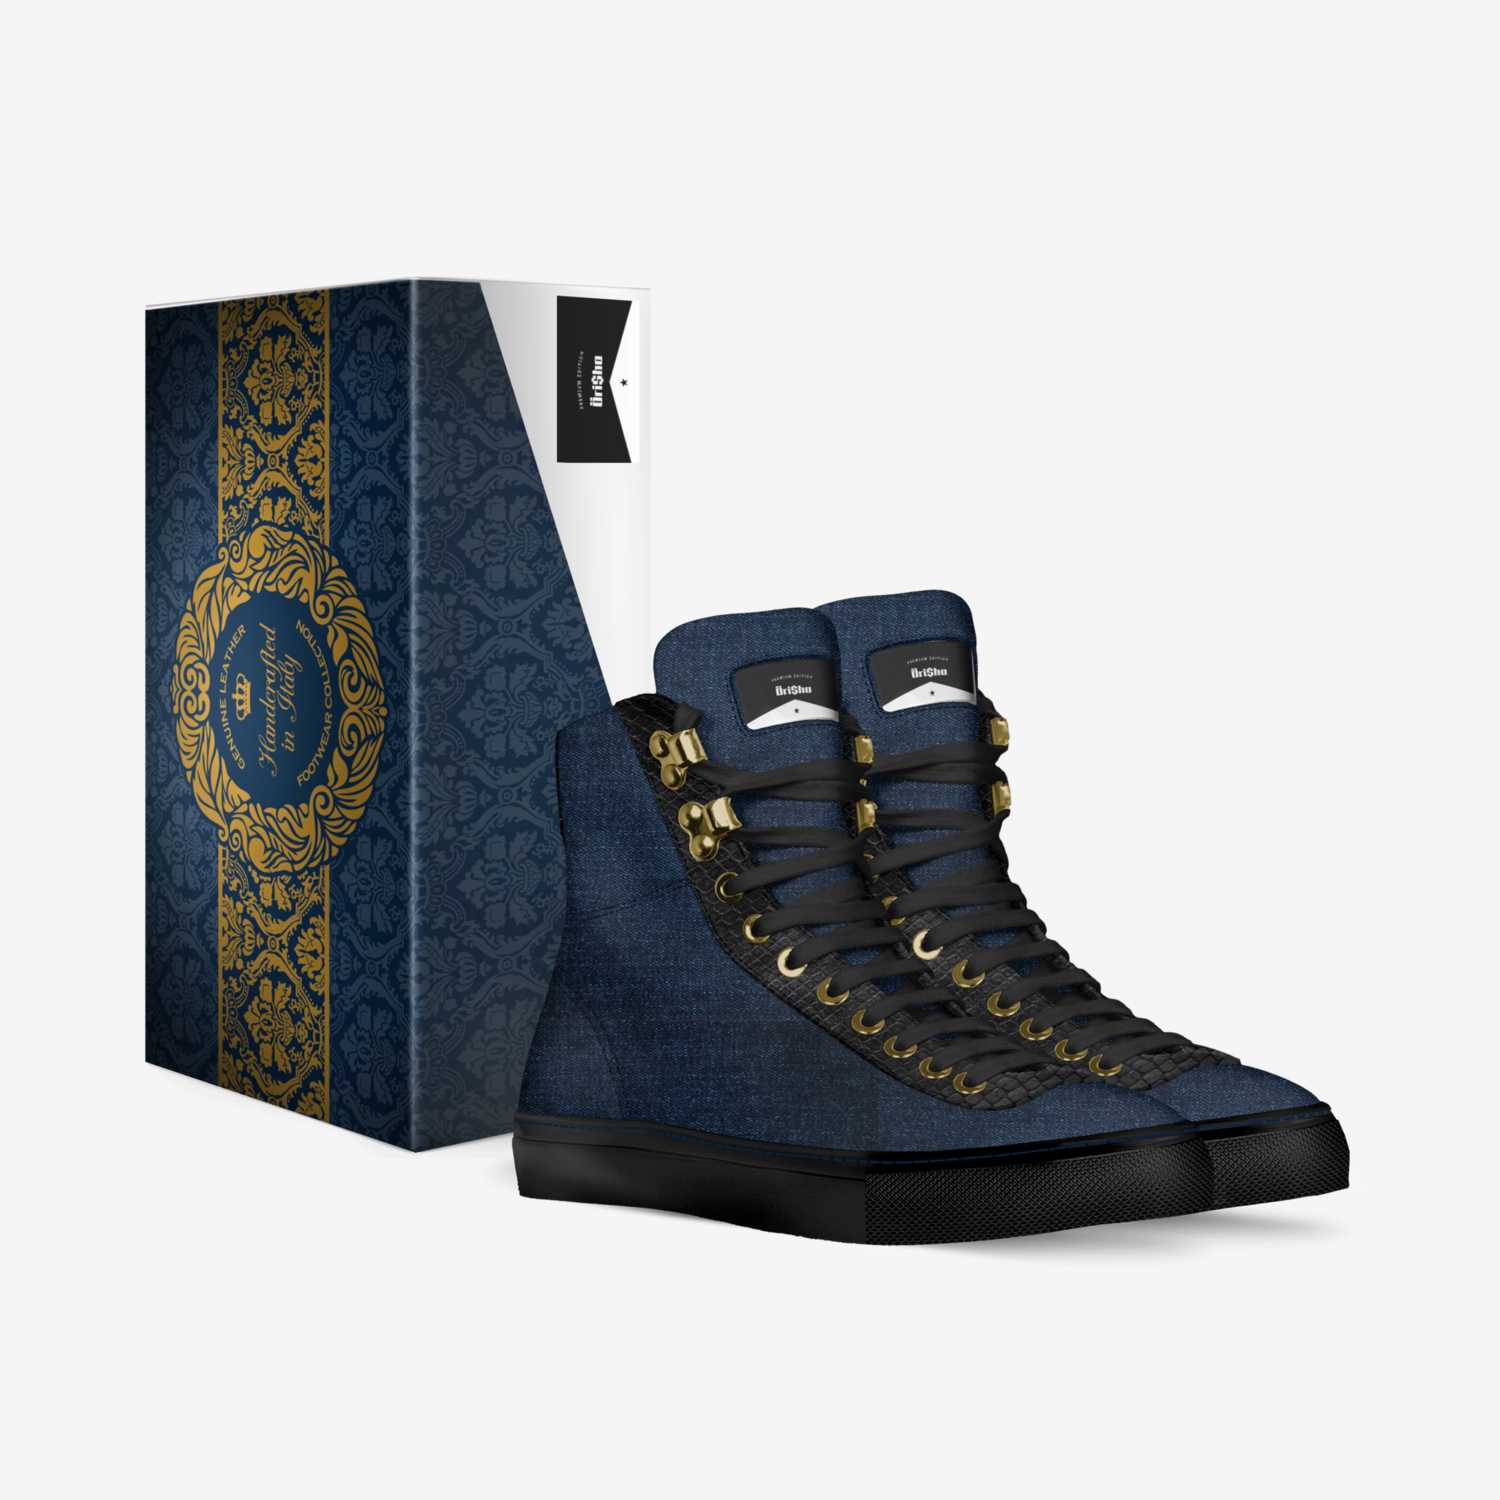 Öri$ha custom made in Italy shoes by Grand Sheba | Box view